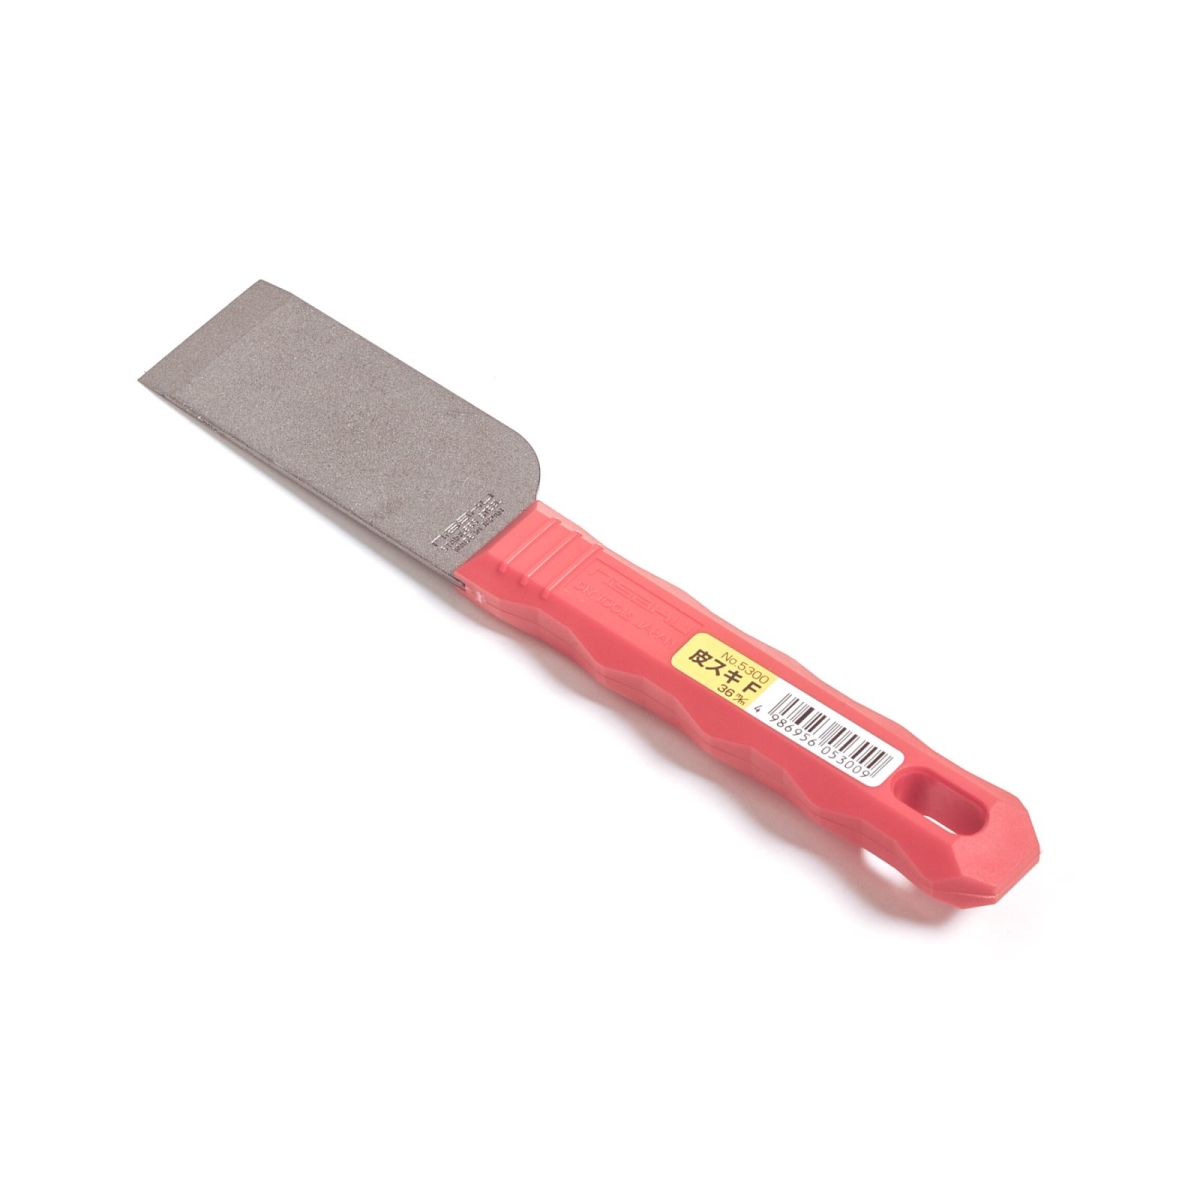 Njp5300 1.5 In. Blade Stainless Steel Fluorine Coated Scraper Knife